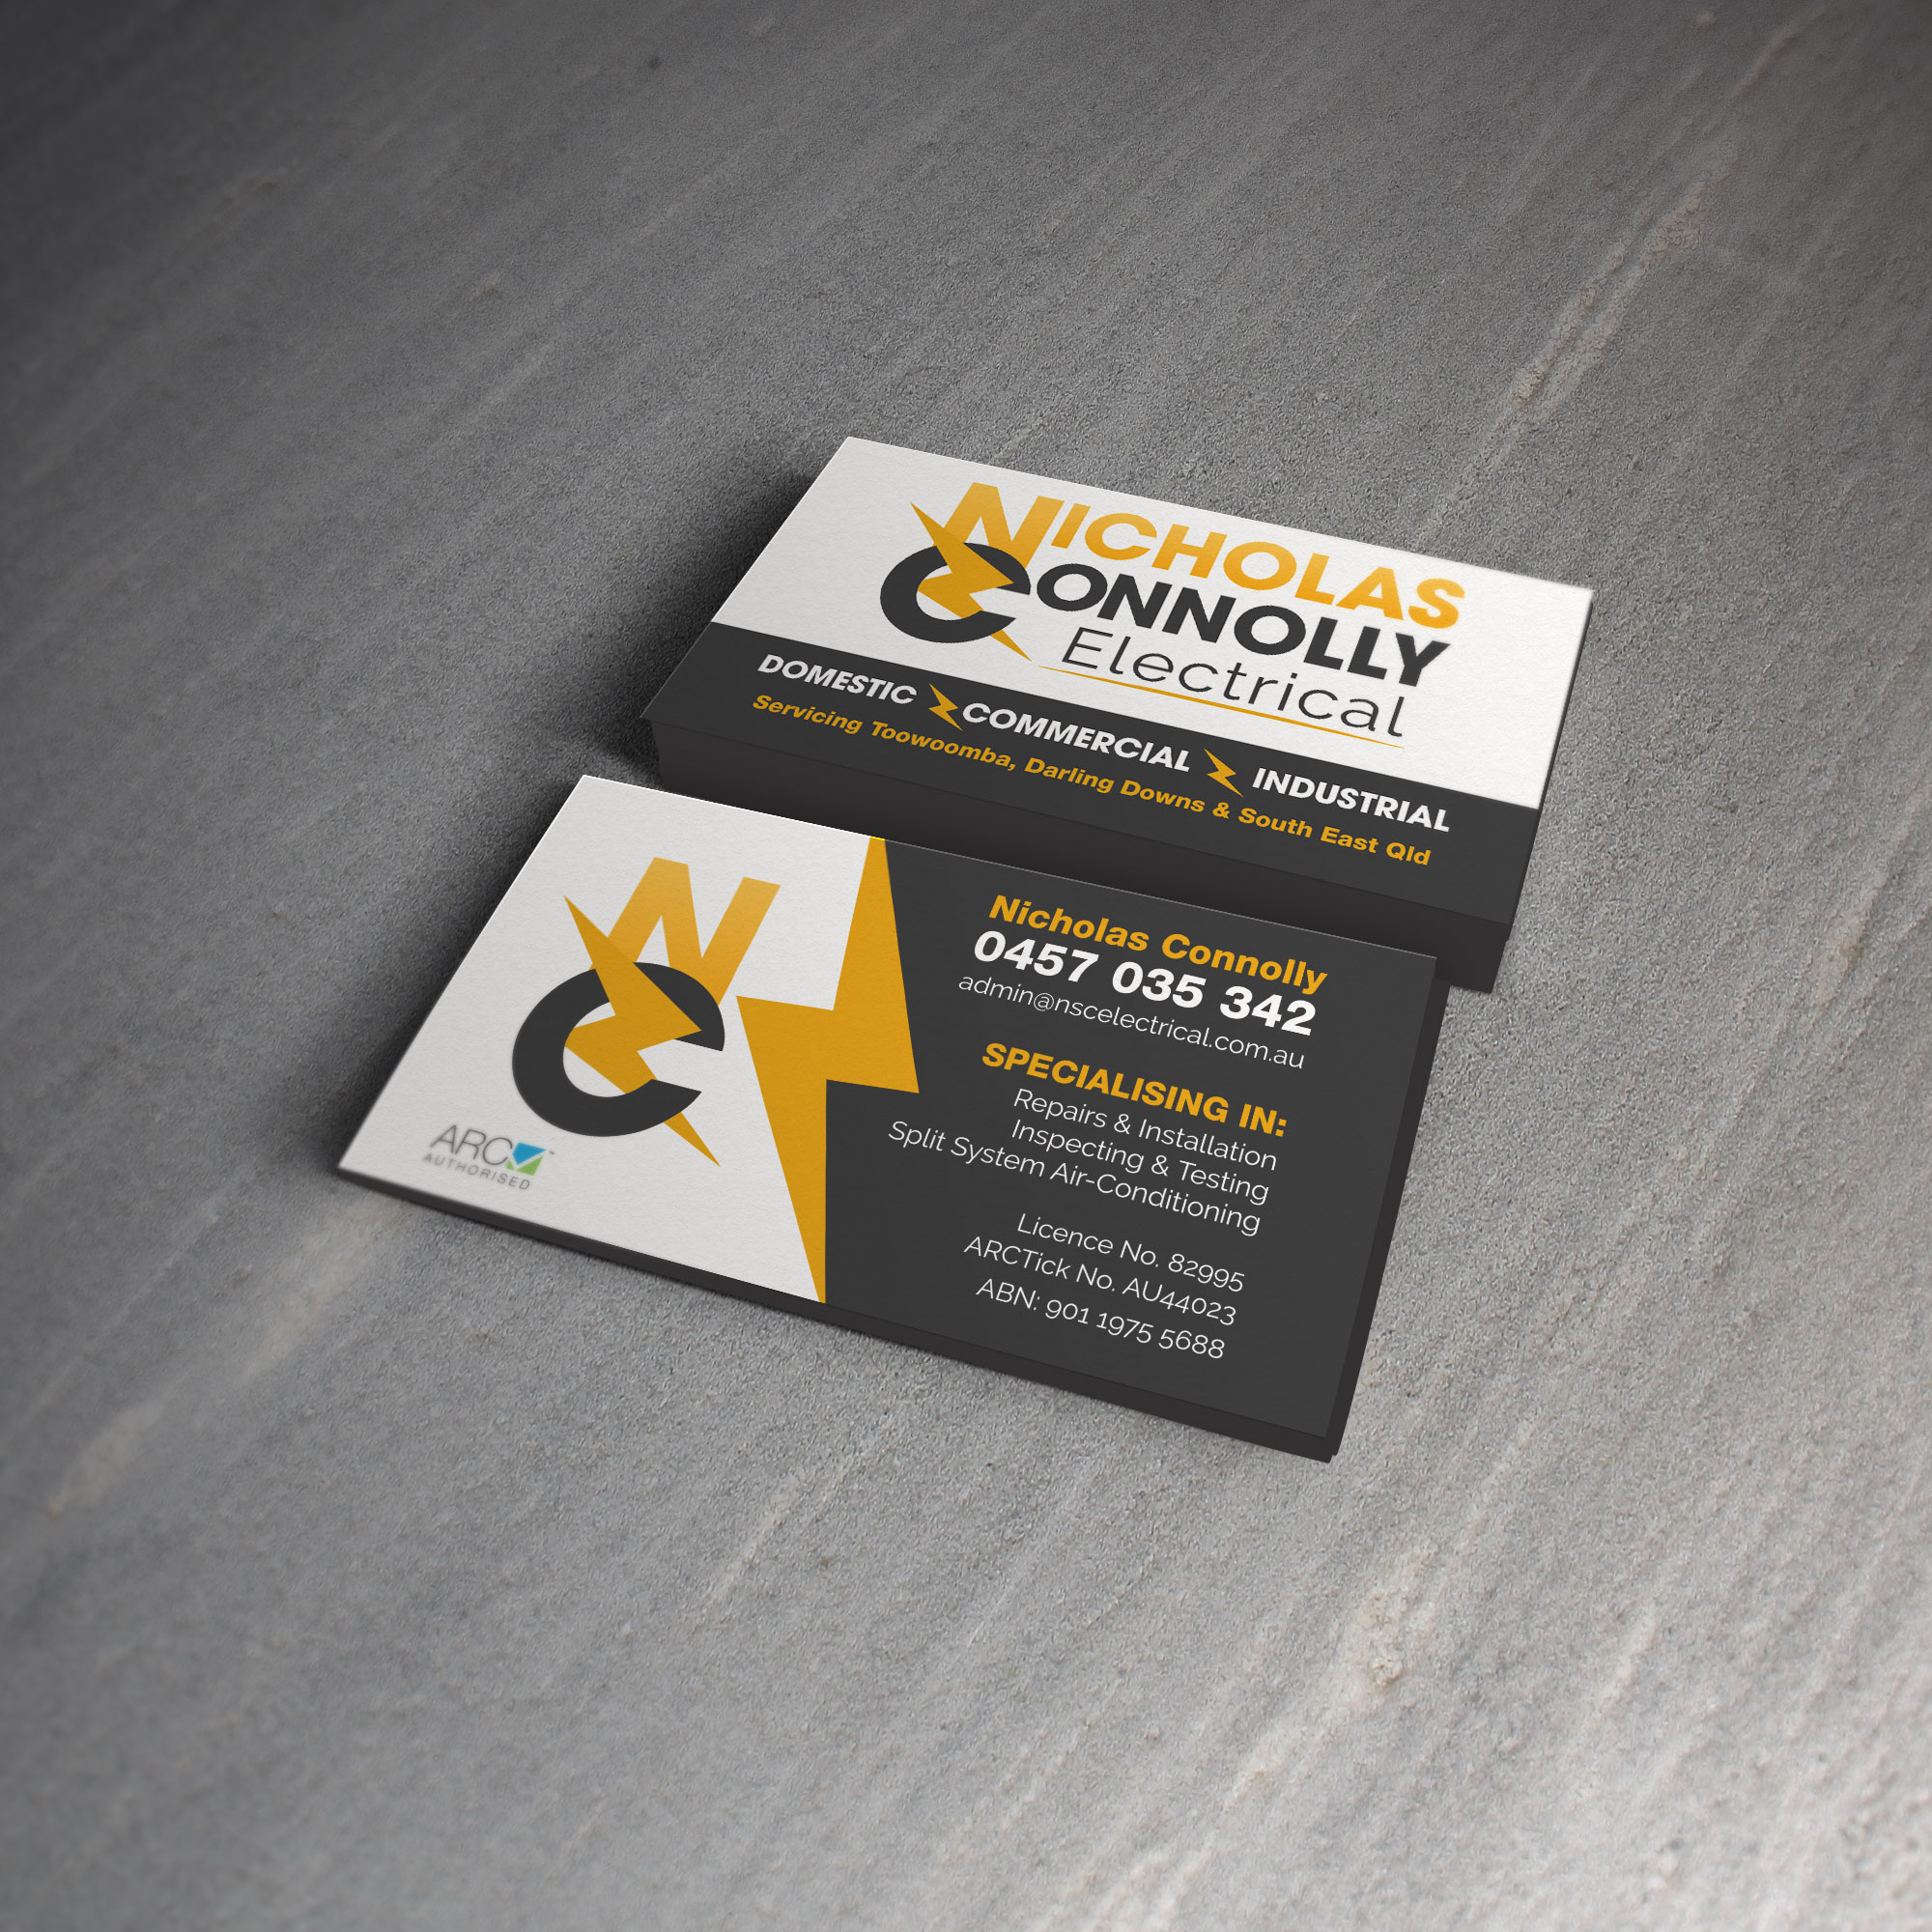 Nicholas Connolly Business Card Design